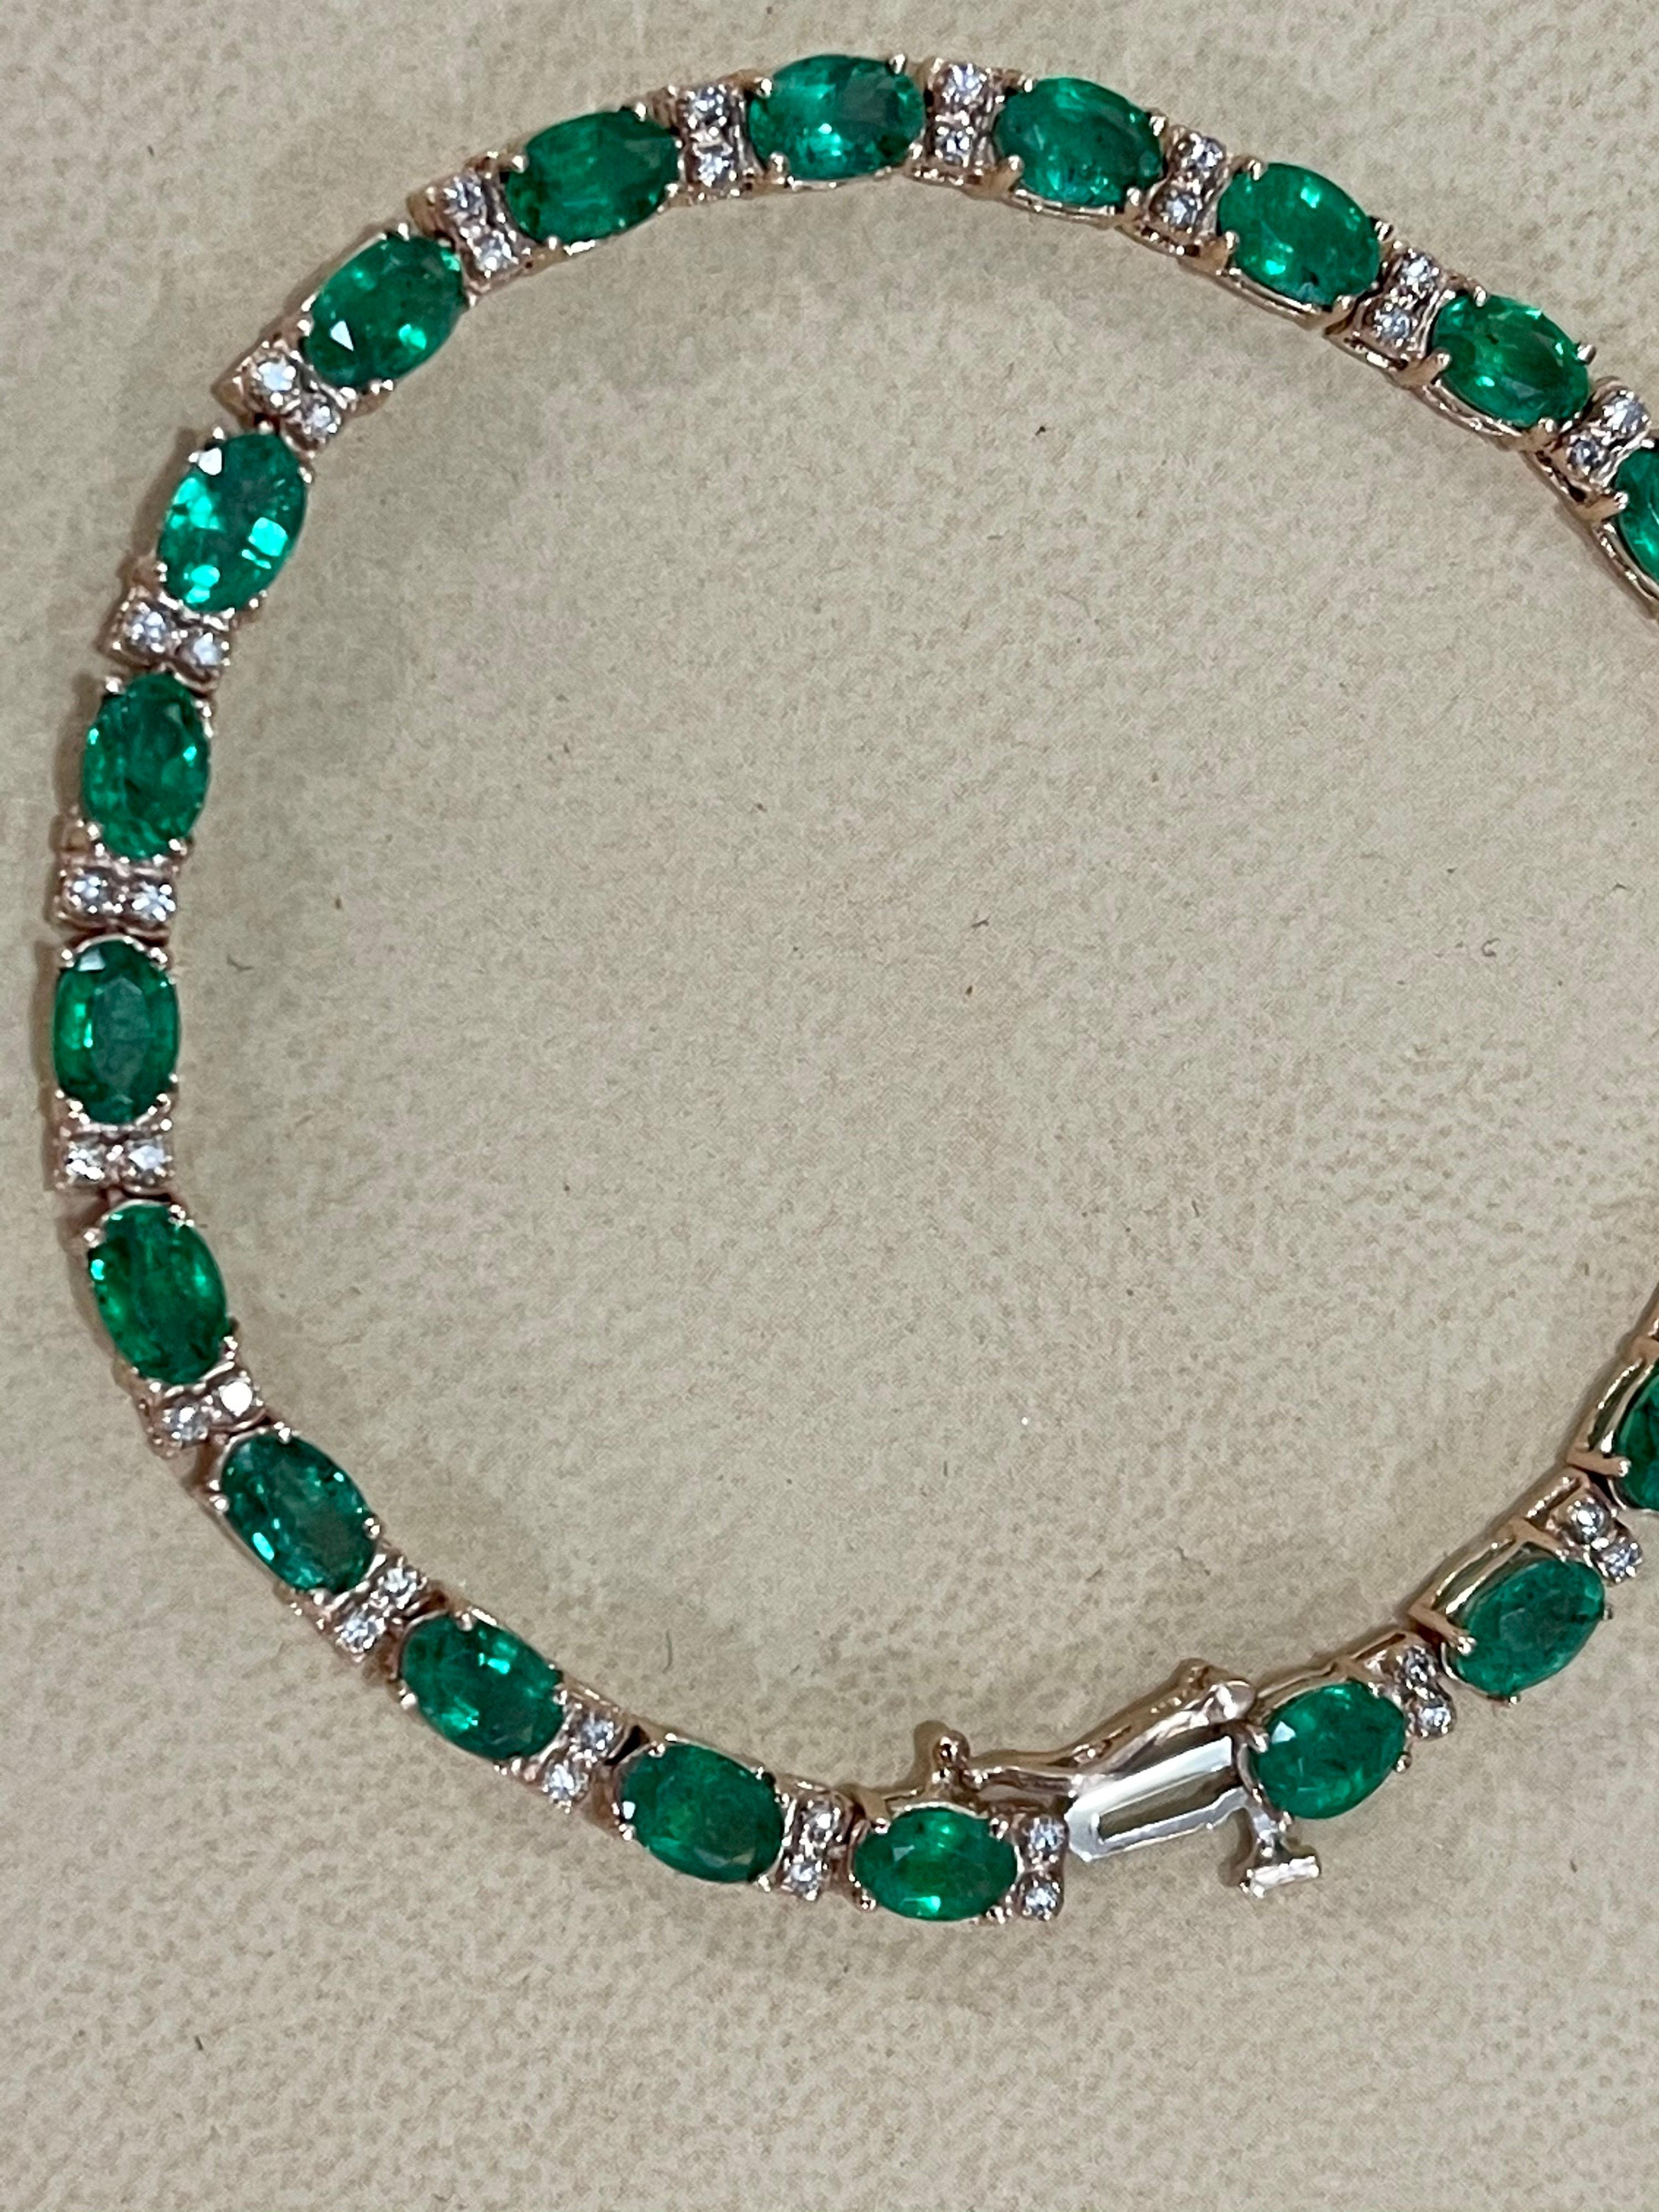 9 Ct Natural Brazilian Emerald and Diamond Tennis Bracelet 14 Karat White Gold 1